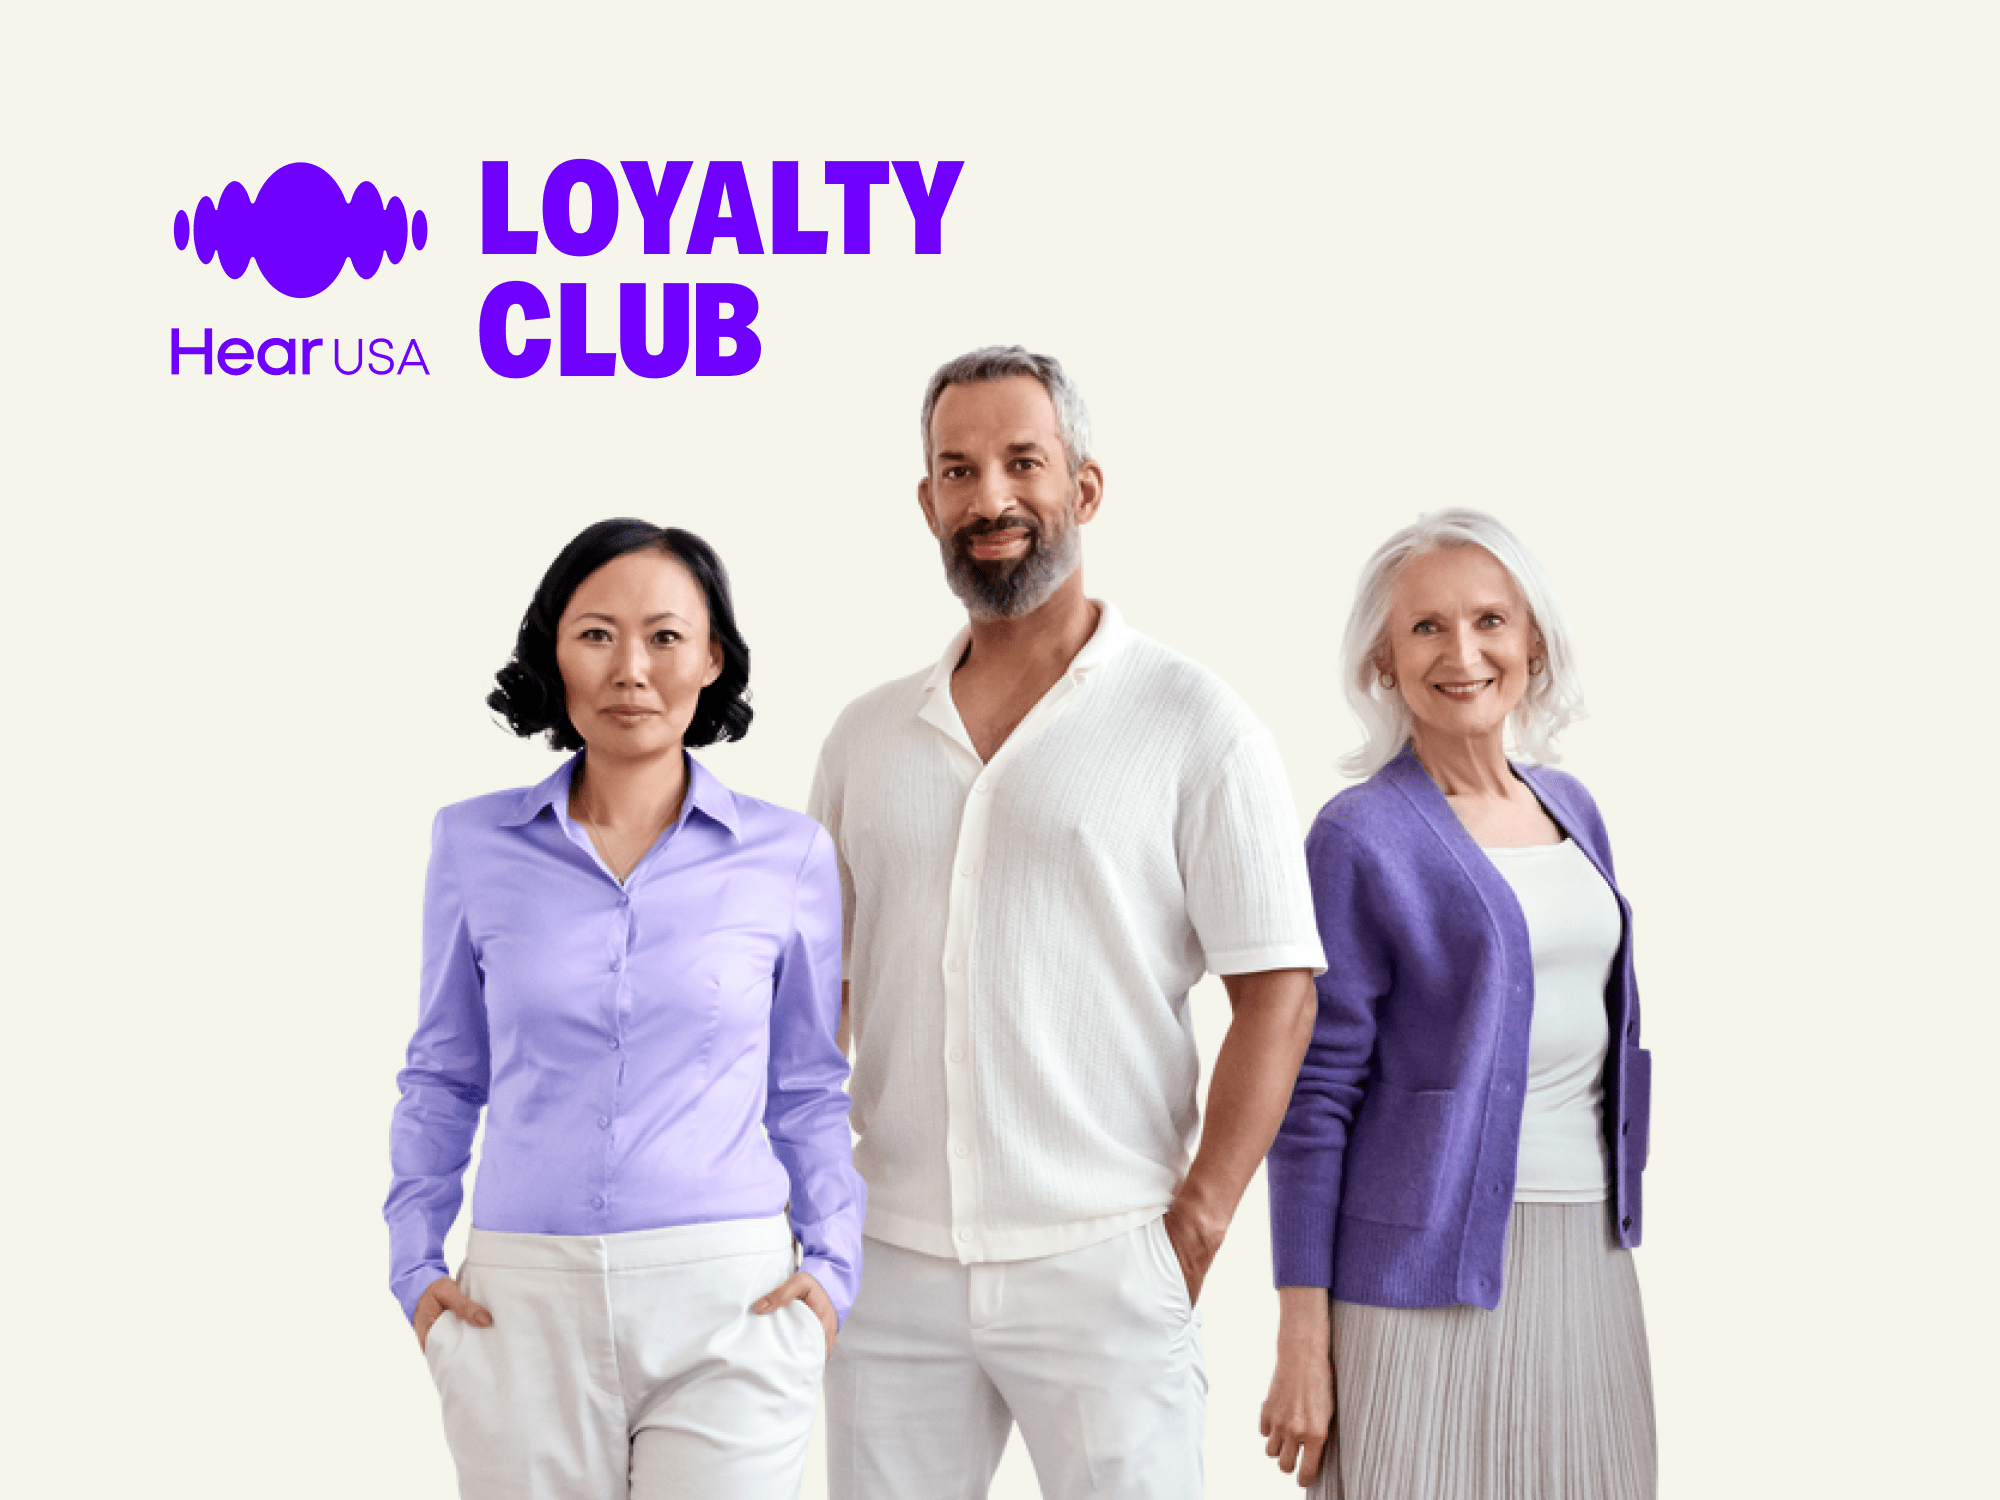 Loyalty Club at HearUSA